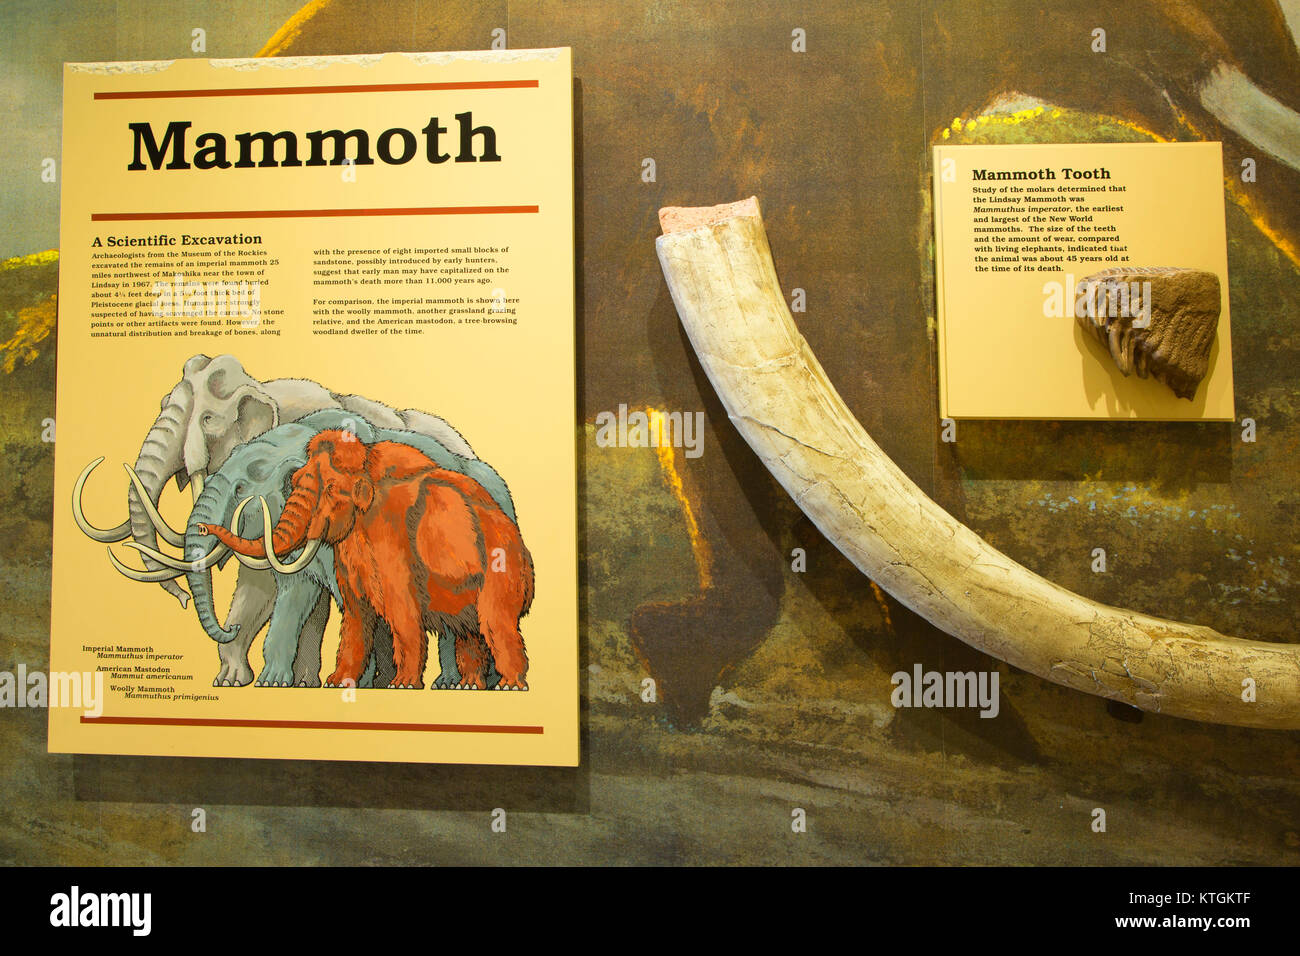 Visitor Center Mammoth Exhibit Makoshika State Park Montana Stock Photo Alamy